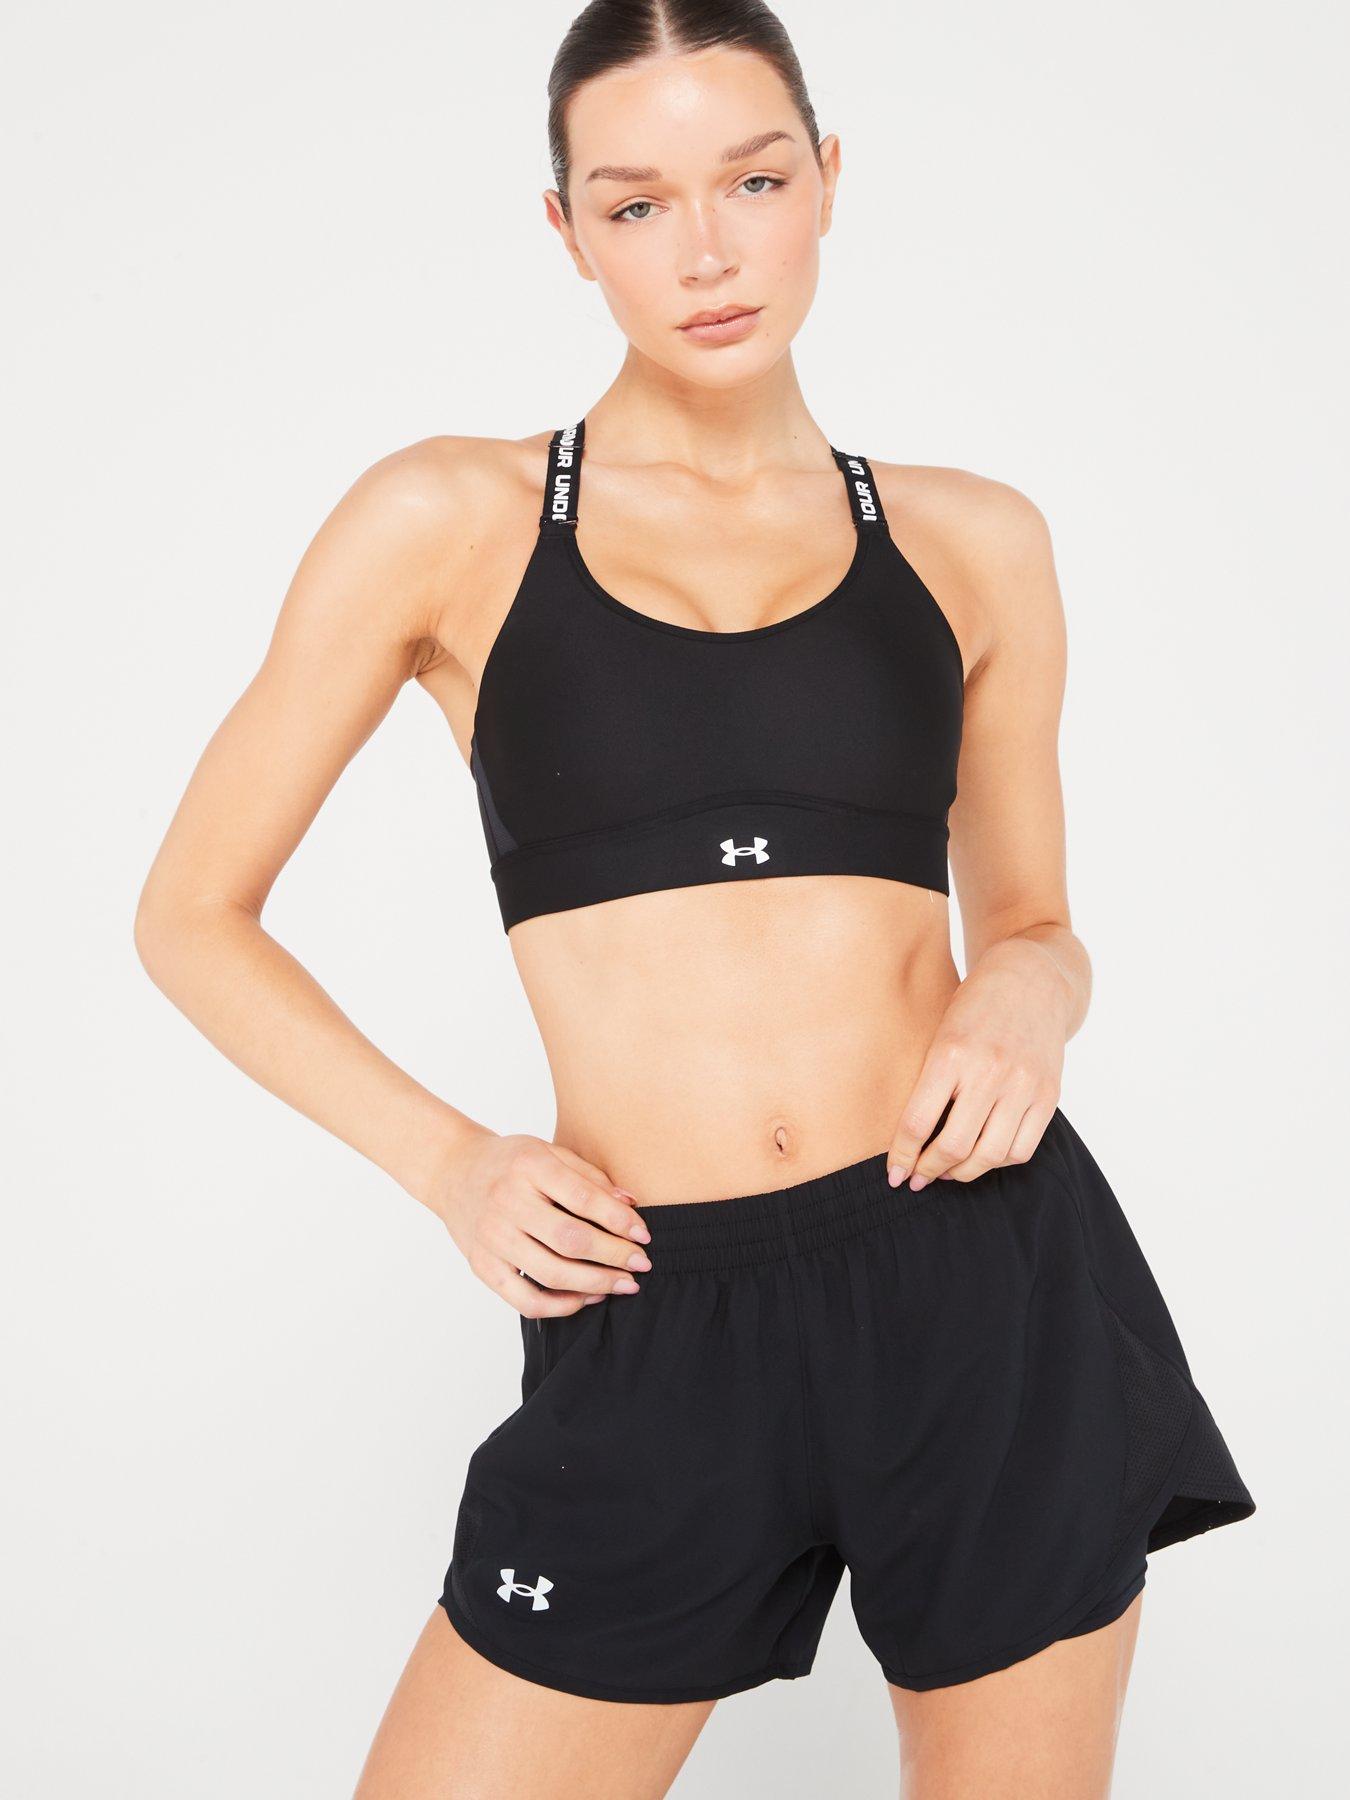 adidas Women's Training Workout Sports Bra High Support - Plus Size - Black/White